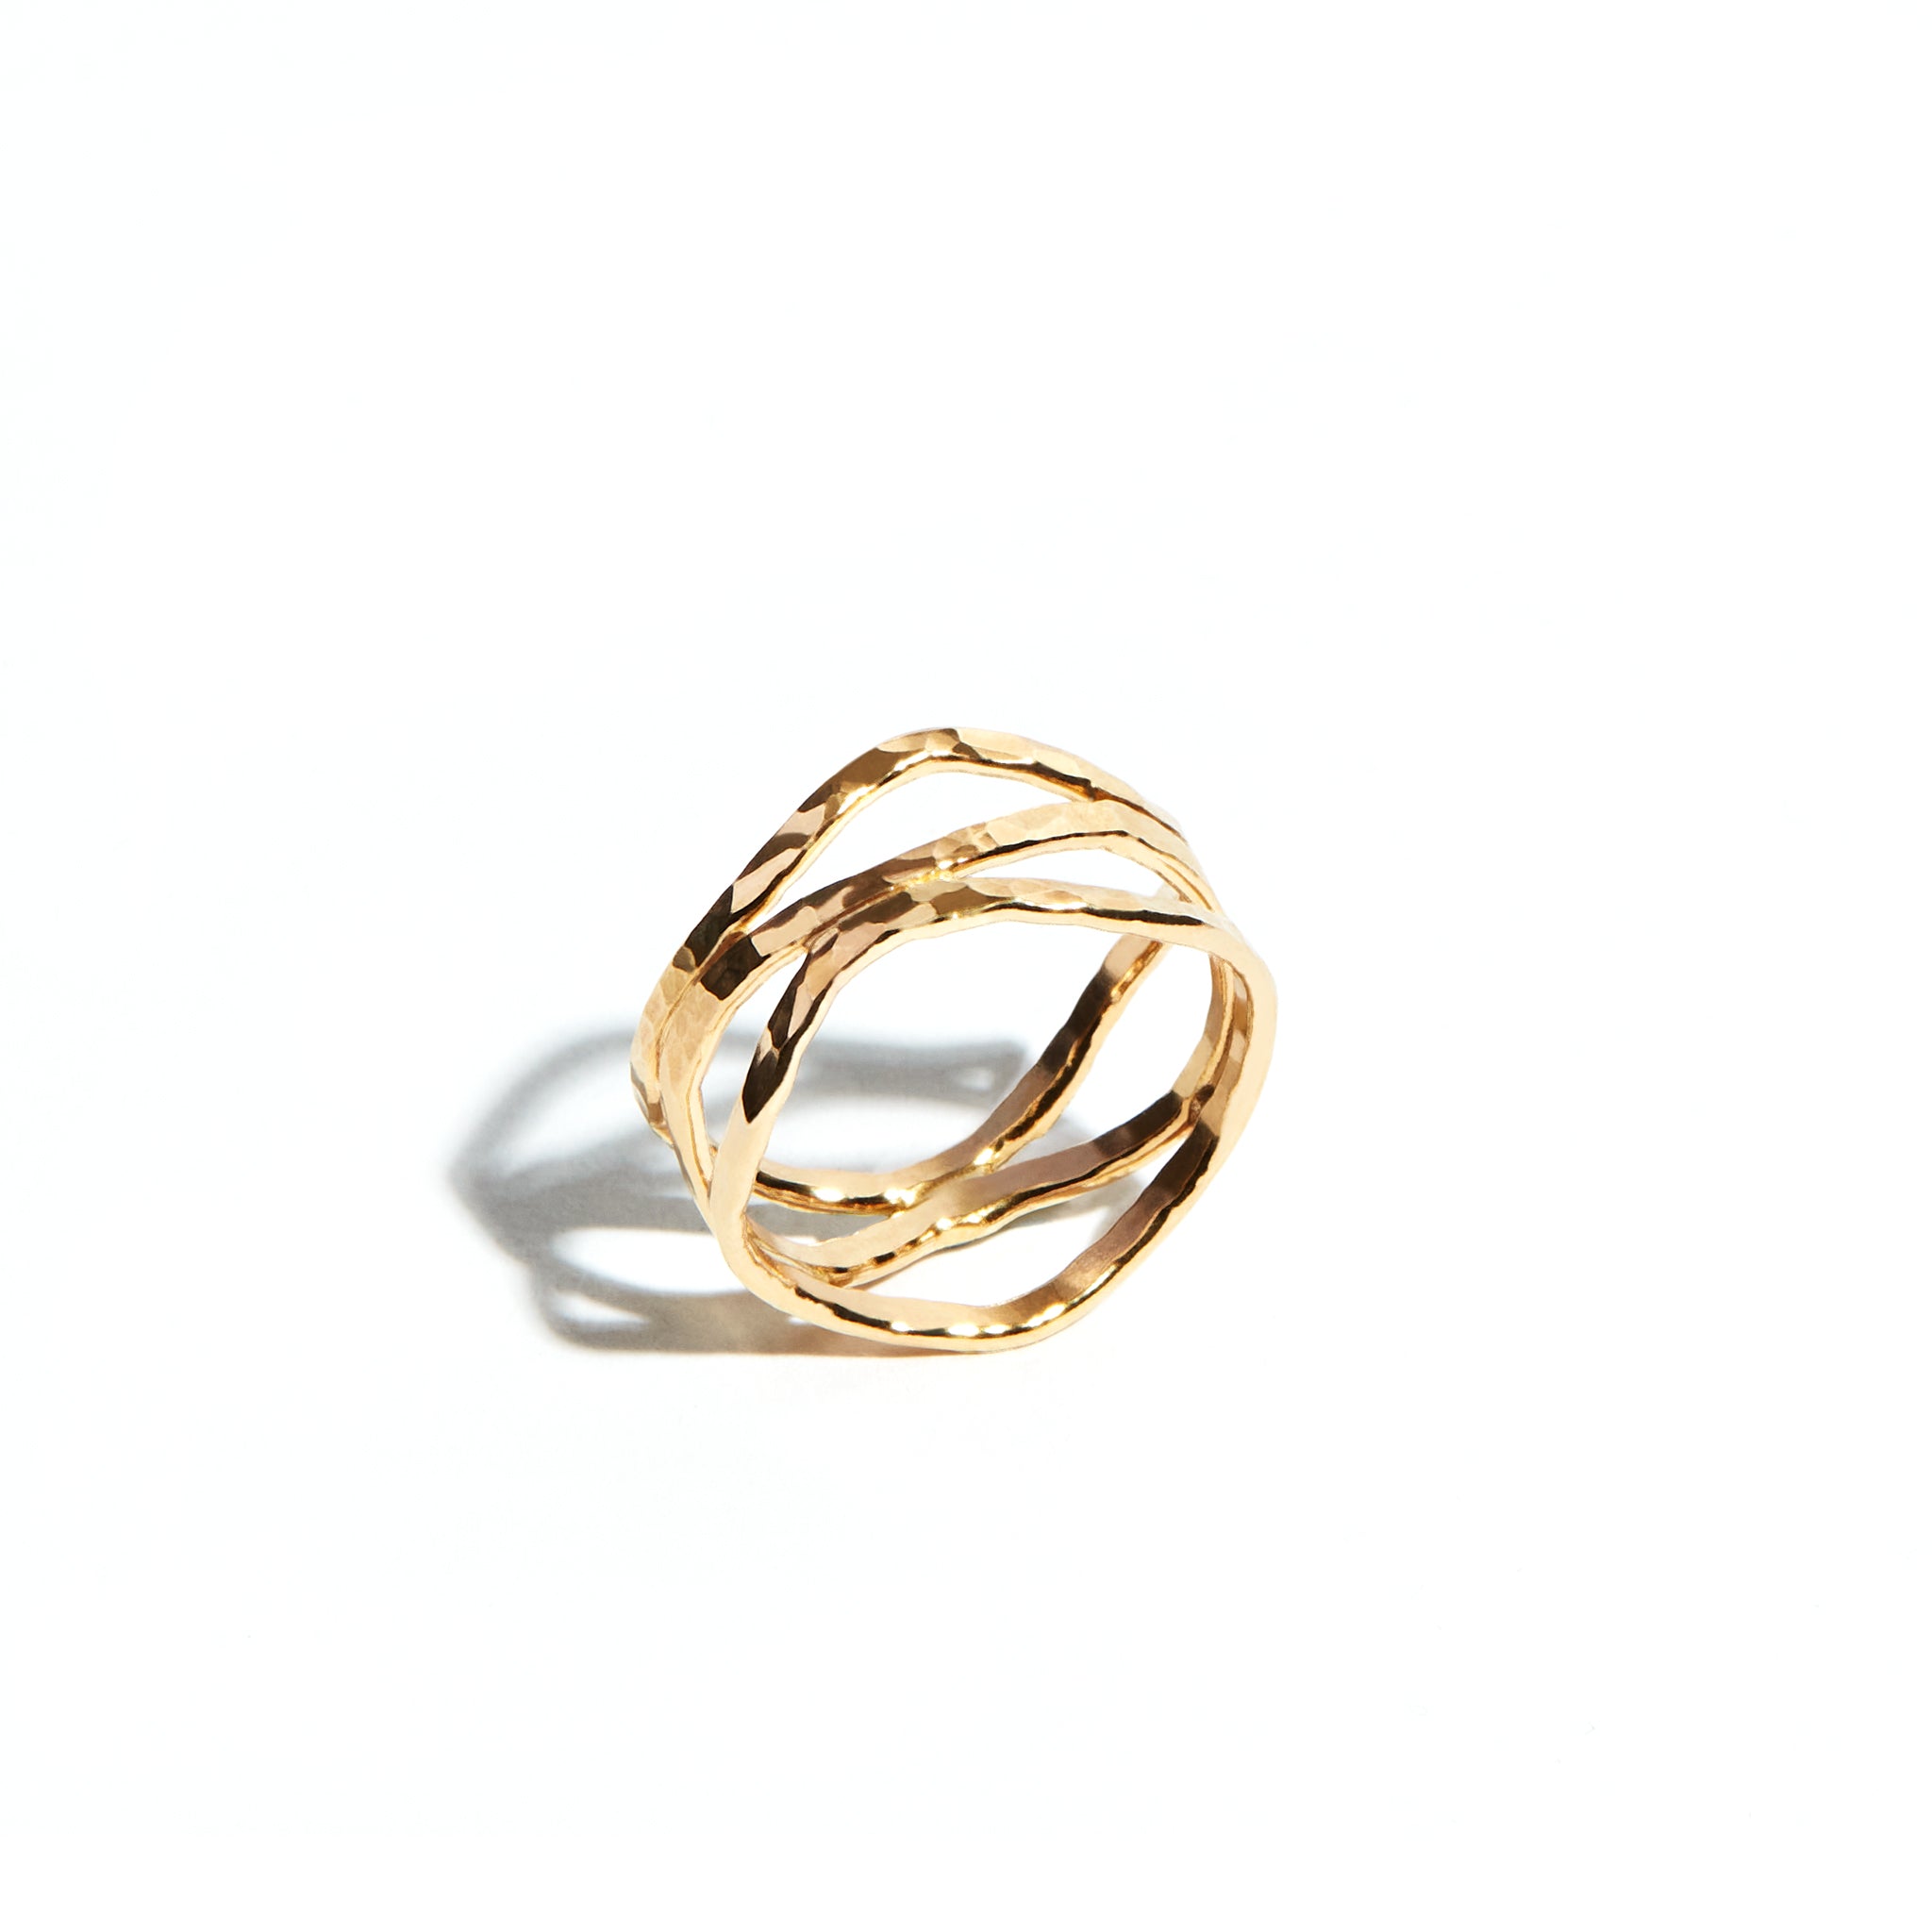 8 Piece Gold Minimalist Ring Set, Gold Twist Ring, Gold Textured Rings, Gold  Spiral Ring, Minimalist Stacking Rings, Gold Stacking Ring Set, - Etsy |  Gold minimalist jewelry, Minimalist jewelry, Hand jewelry rings